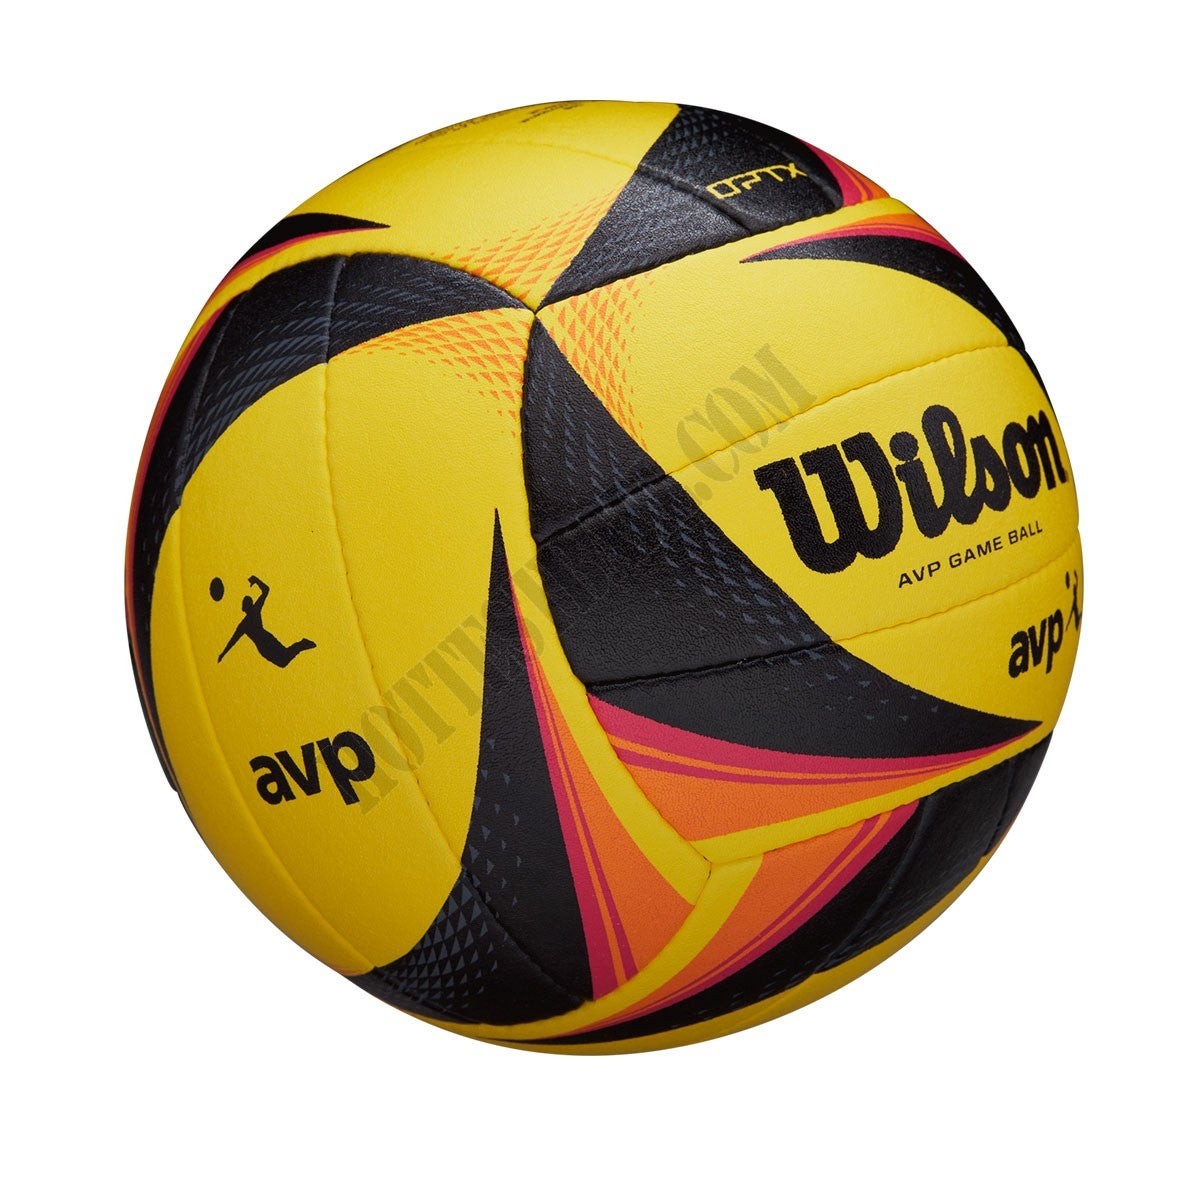 OPTX AVP Game Volleyball - Deflated - Wilson Discount Store - -1